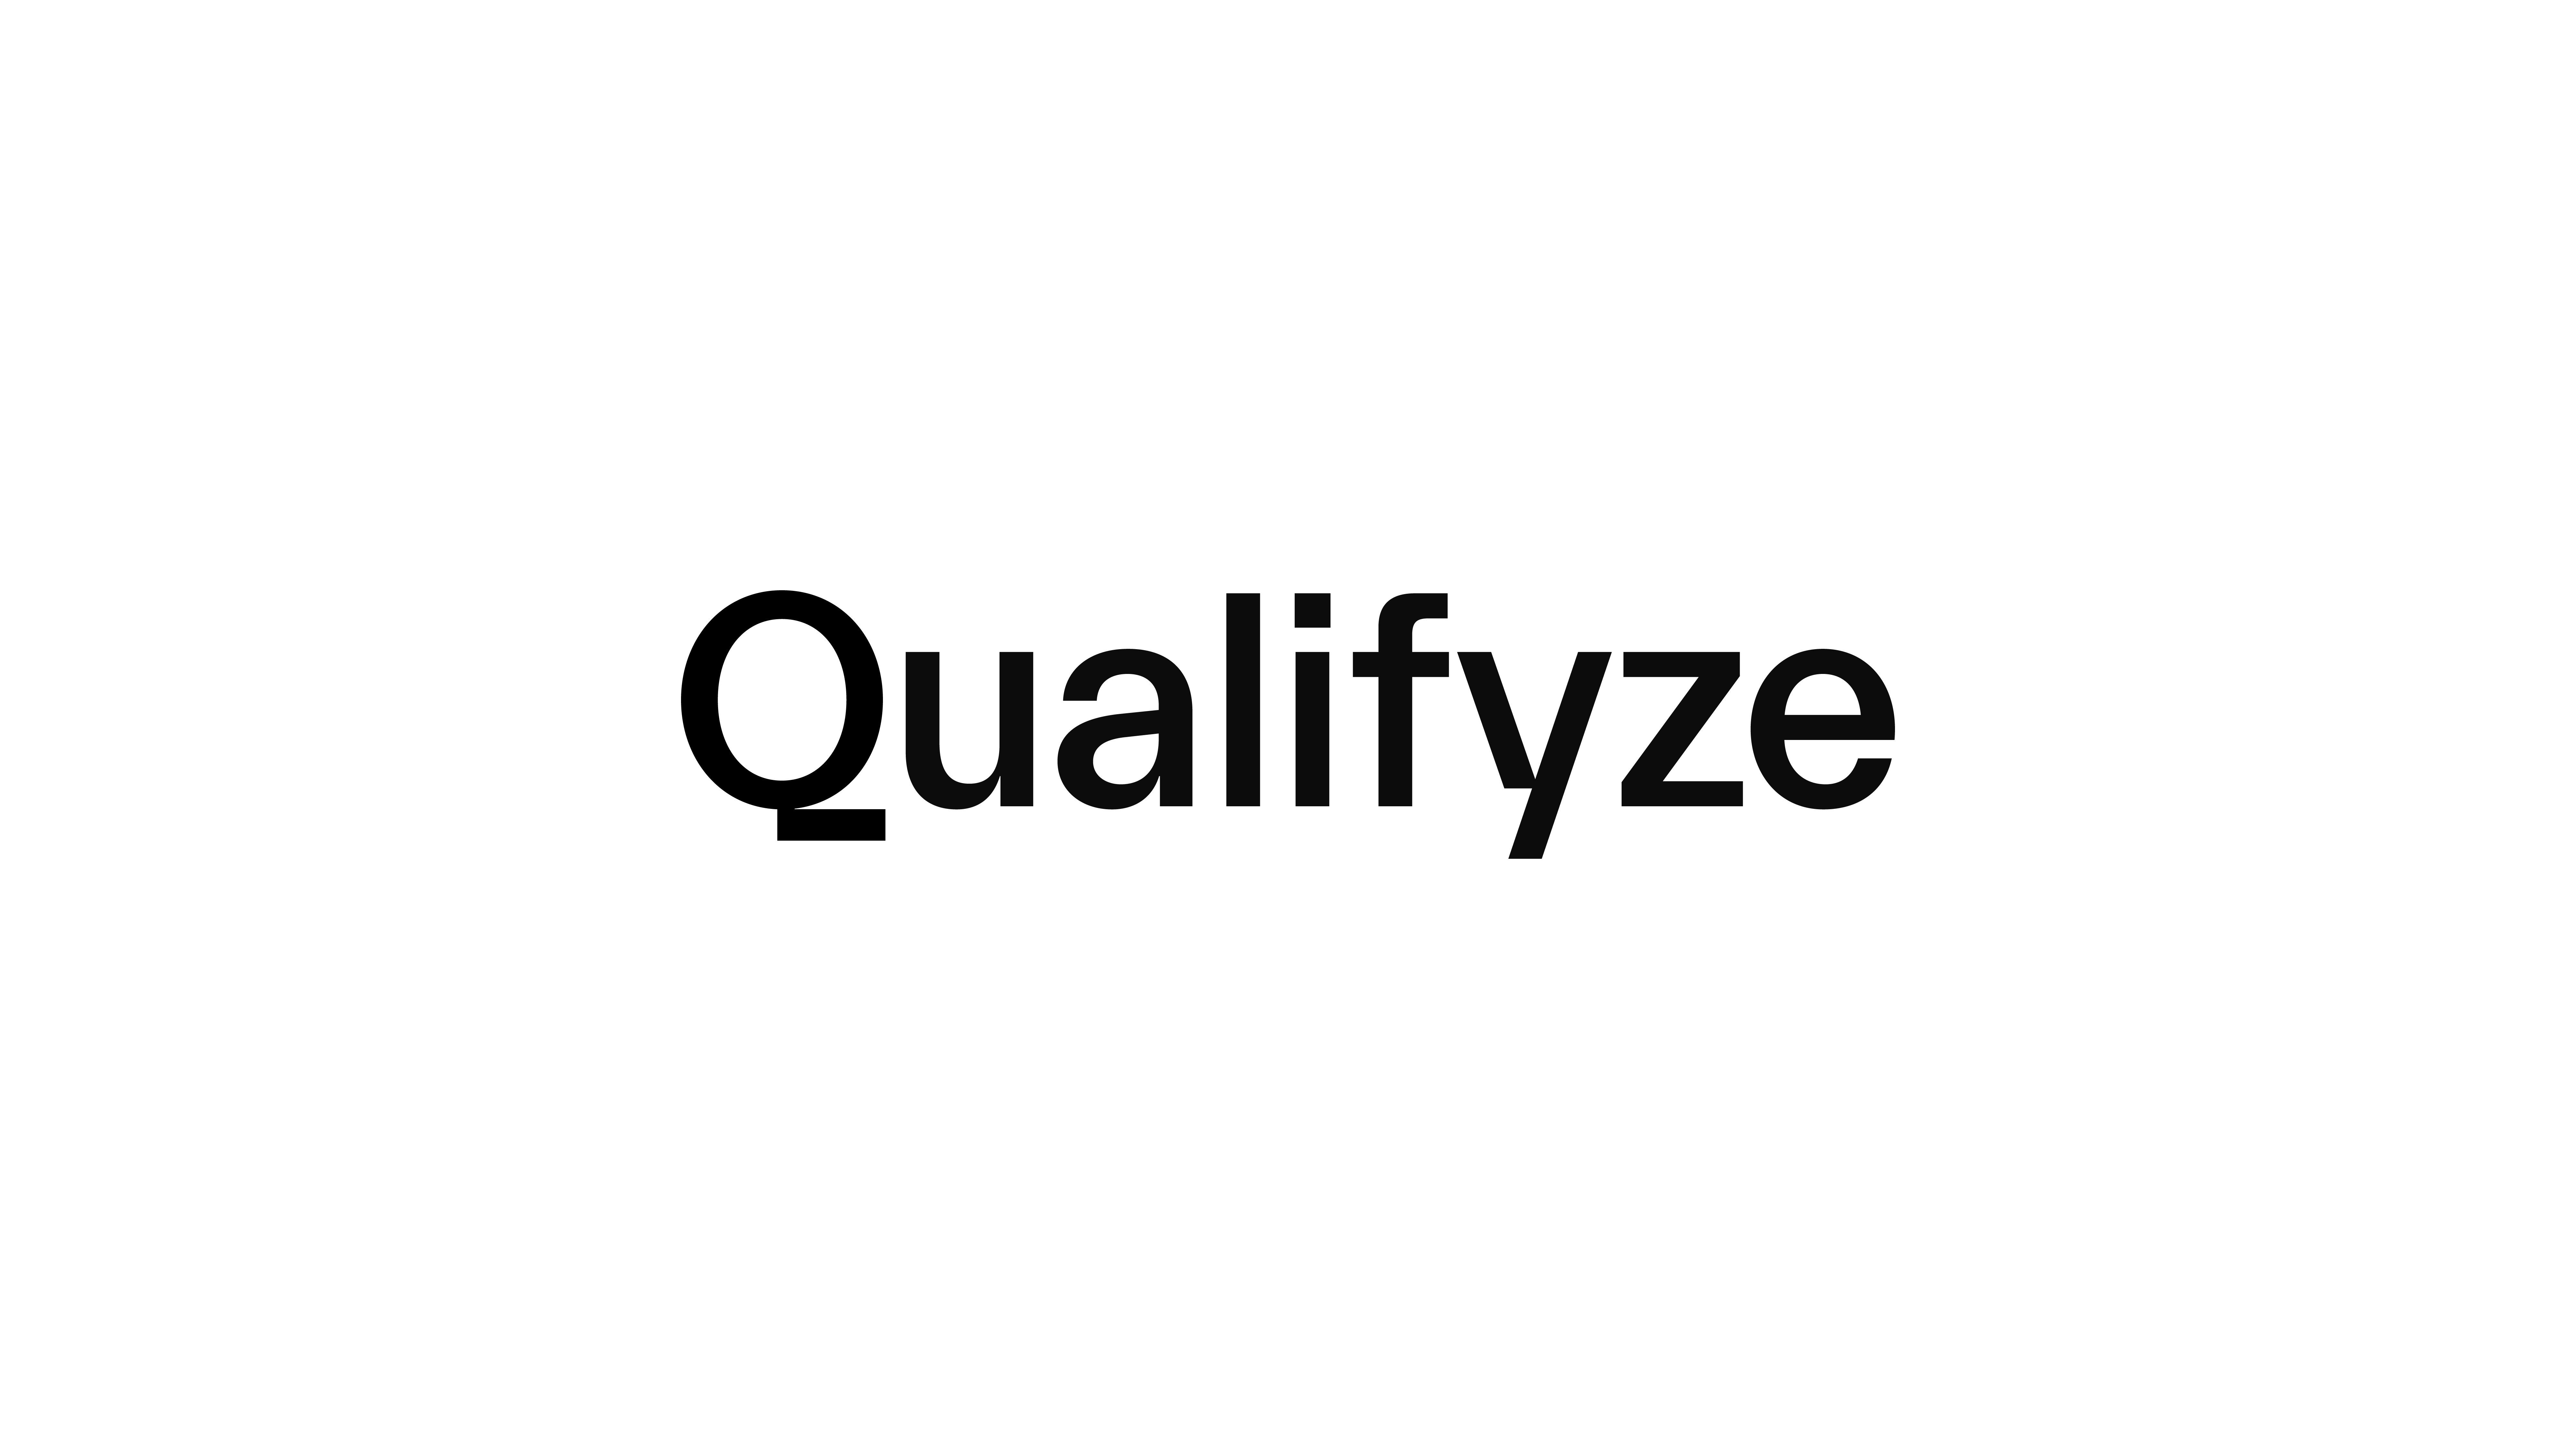 Qualifyze: a global compliance auditing platform